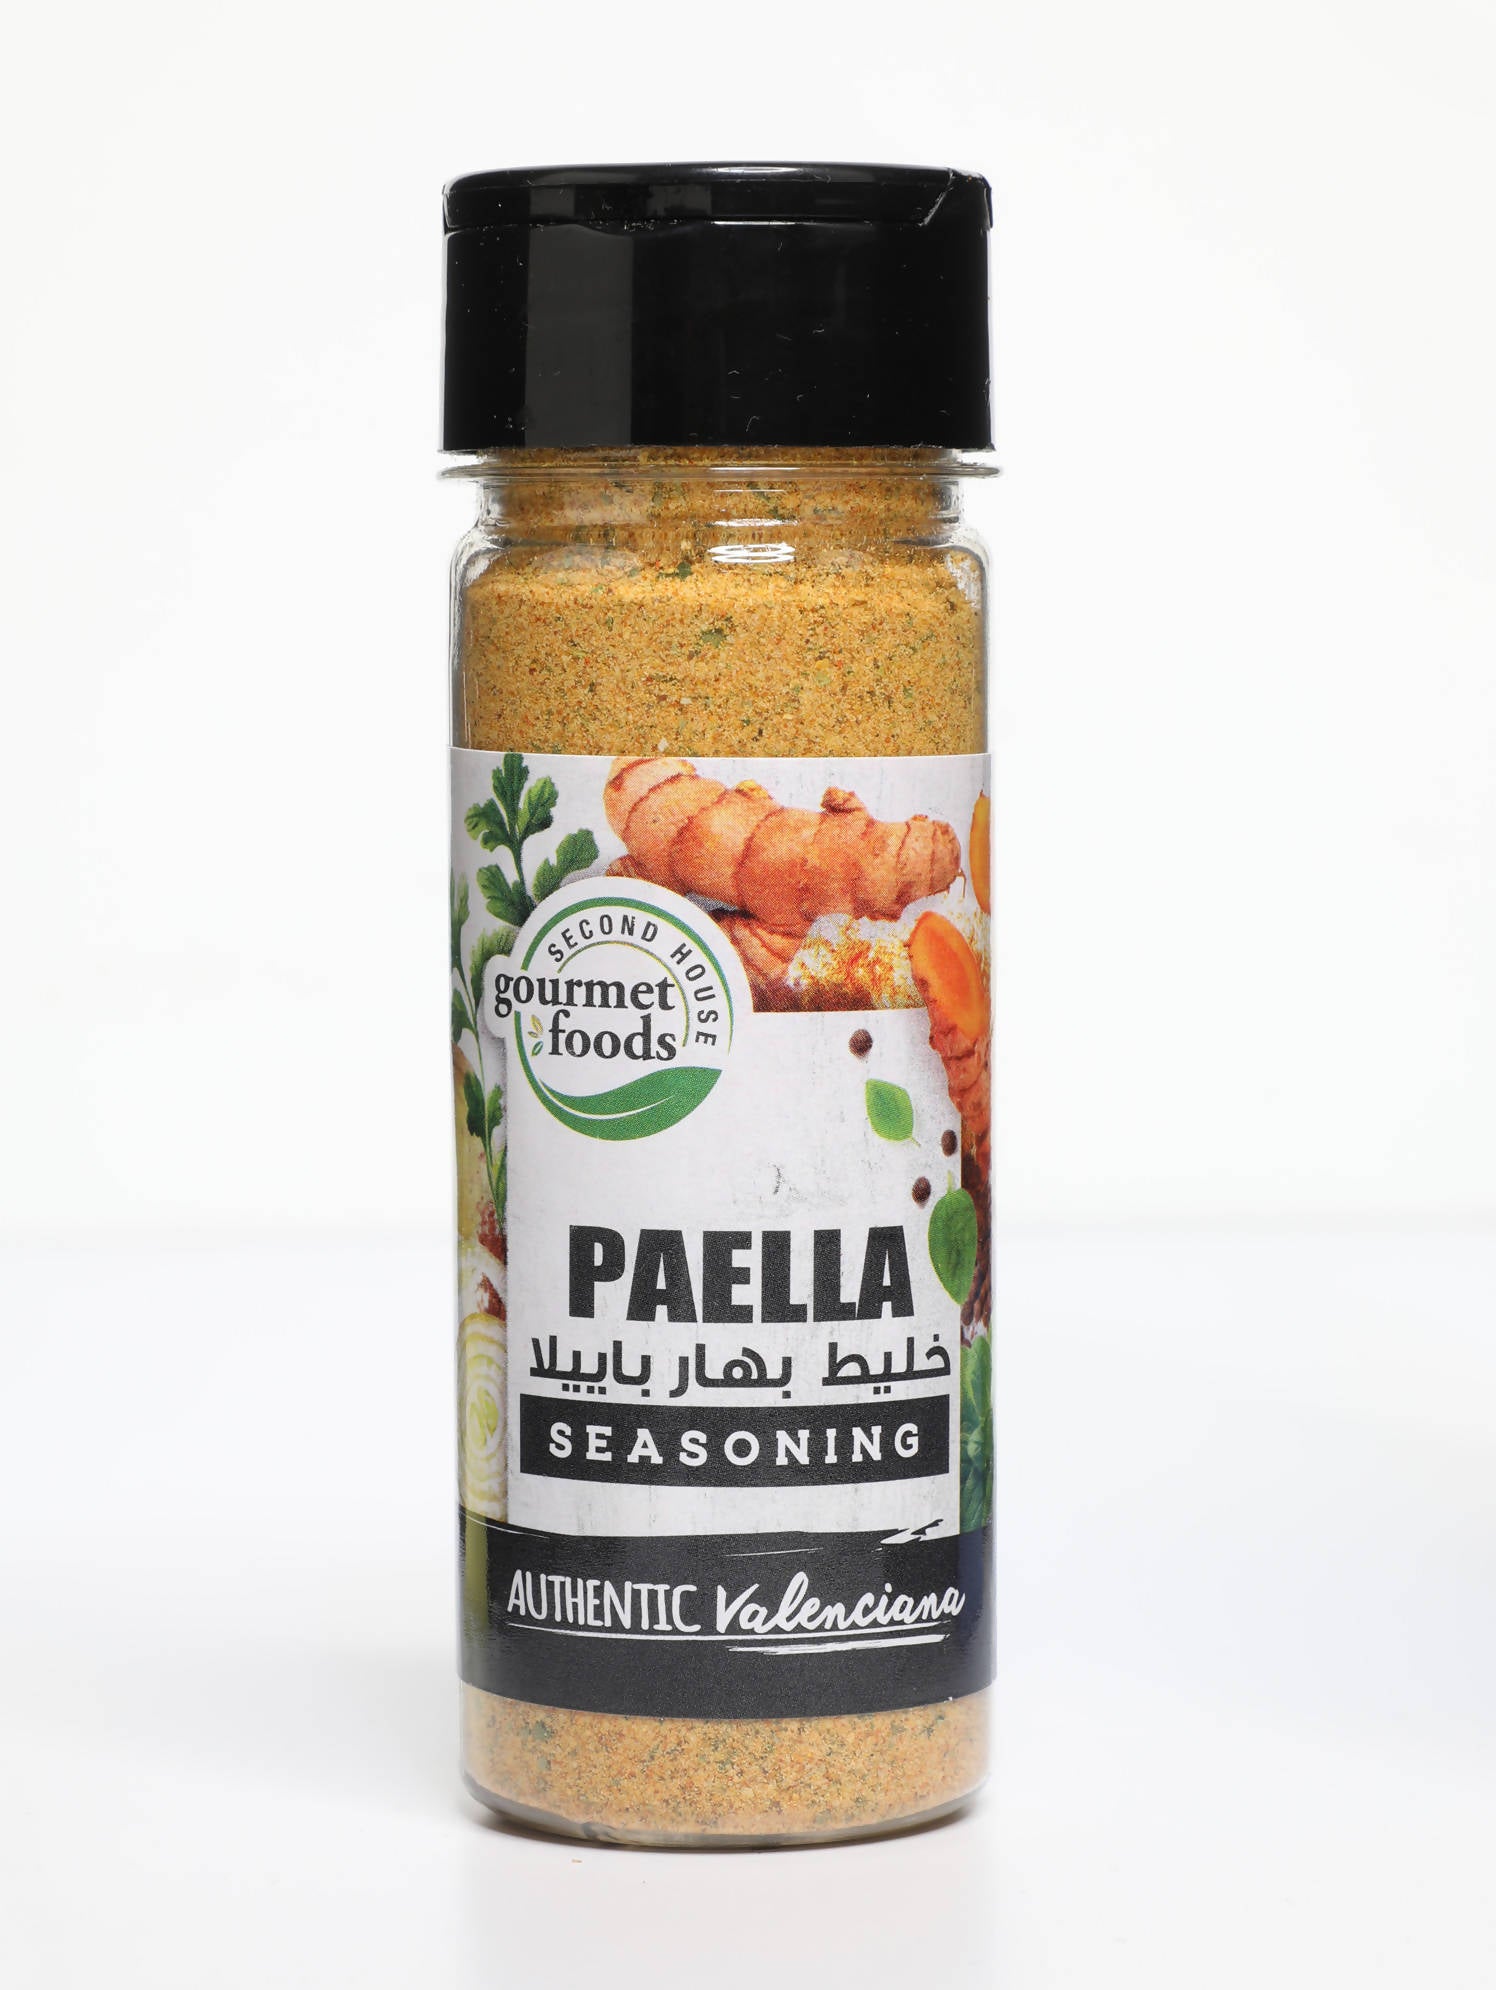 SH Gourmet Foods Paella Seasoning 50g